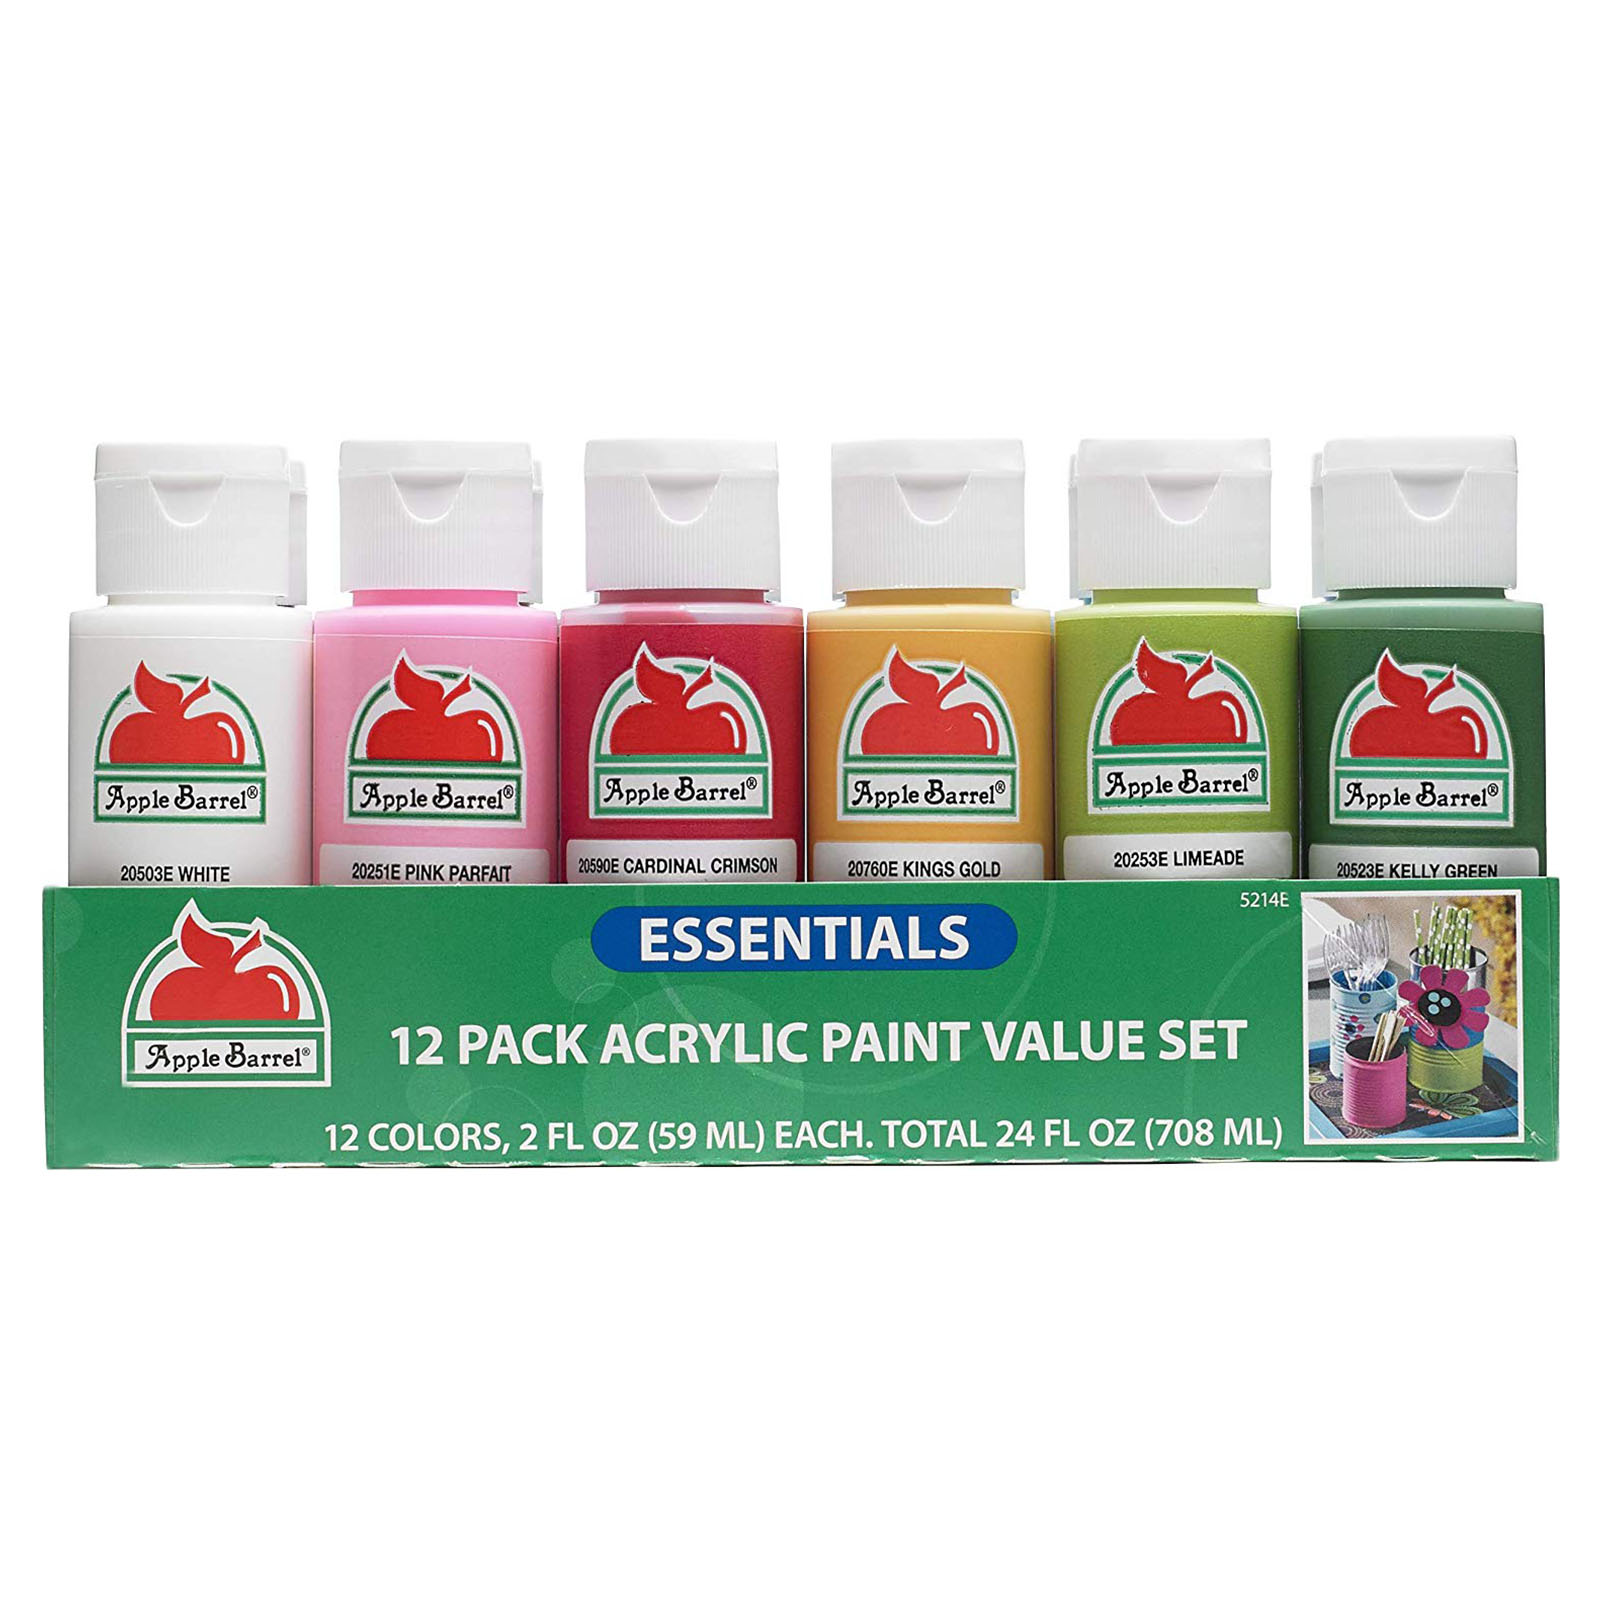 Plaid • Apple barrel essentials acrylic paint value set 12 pack